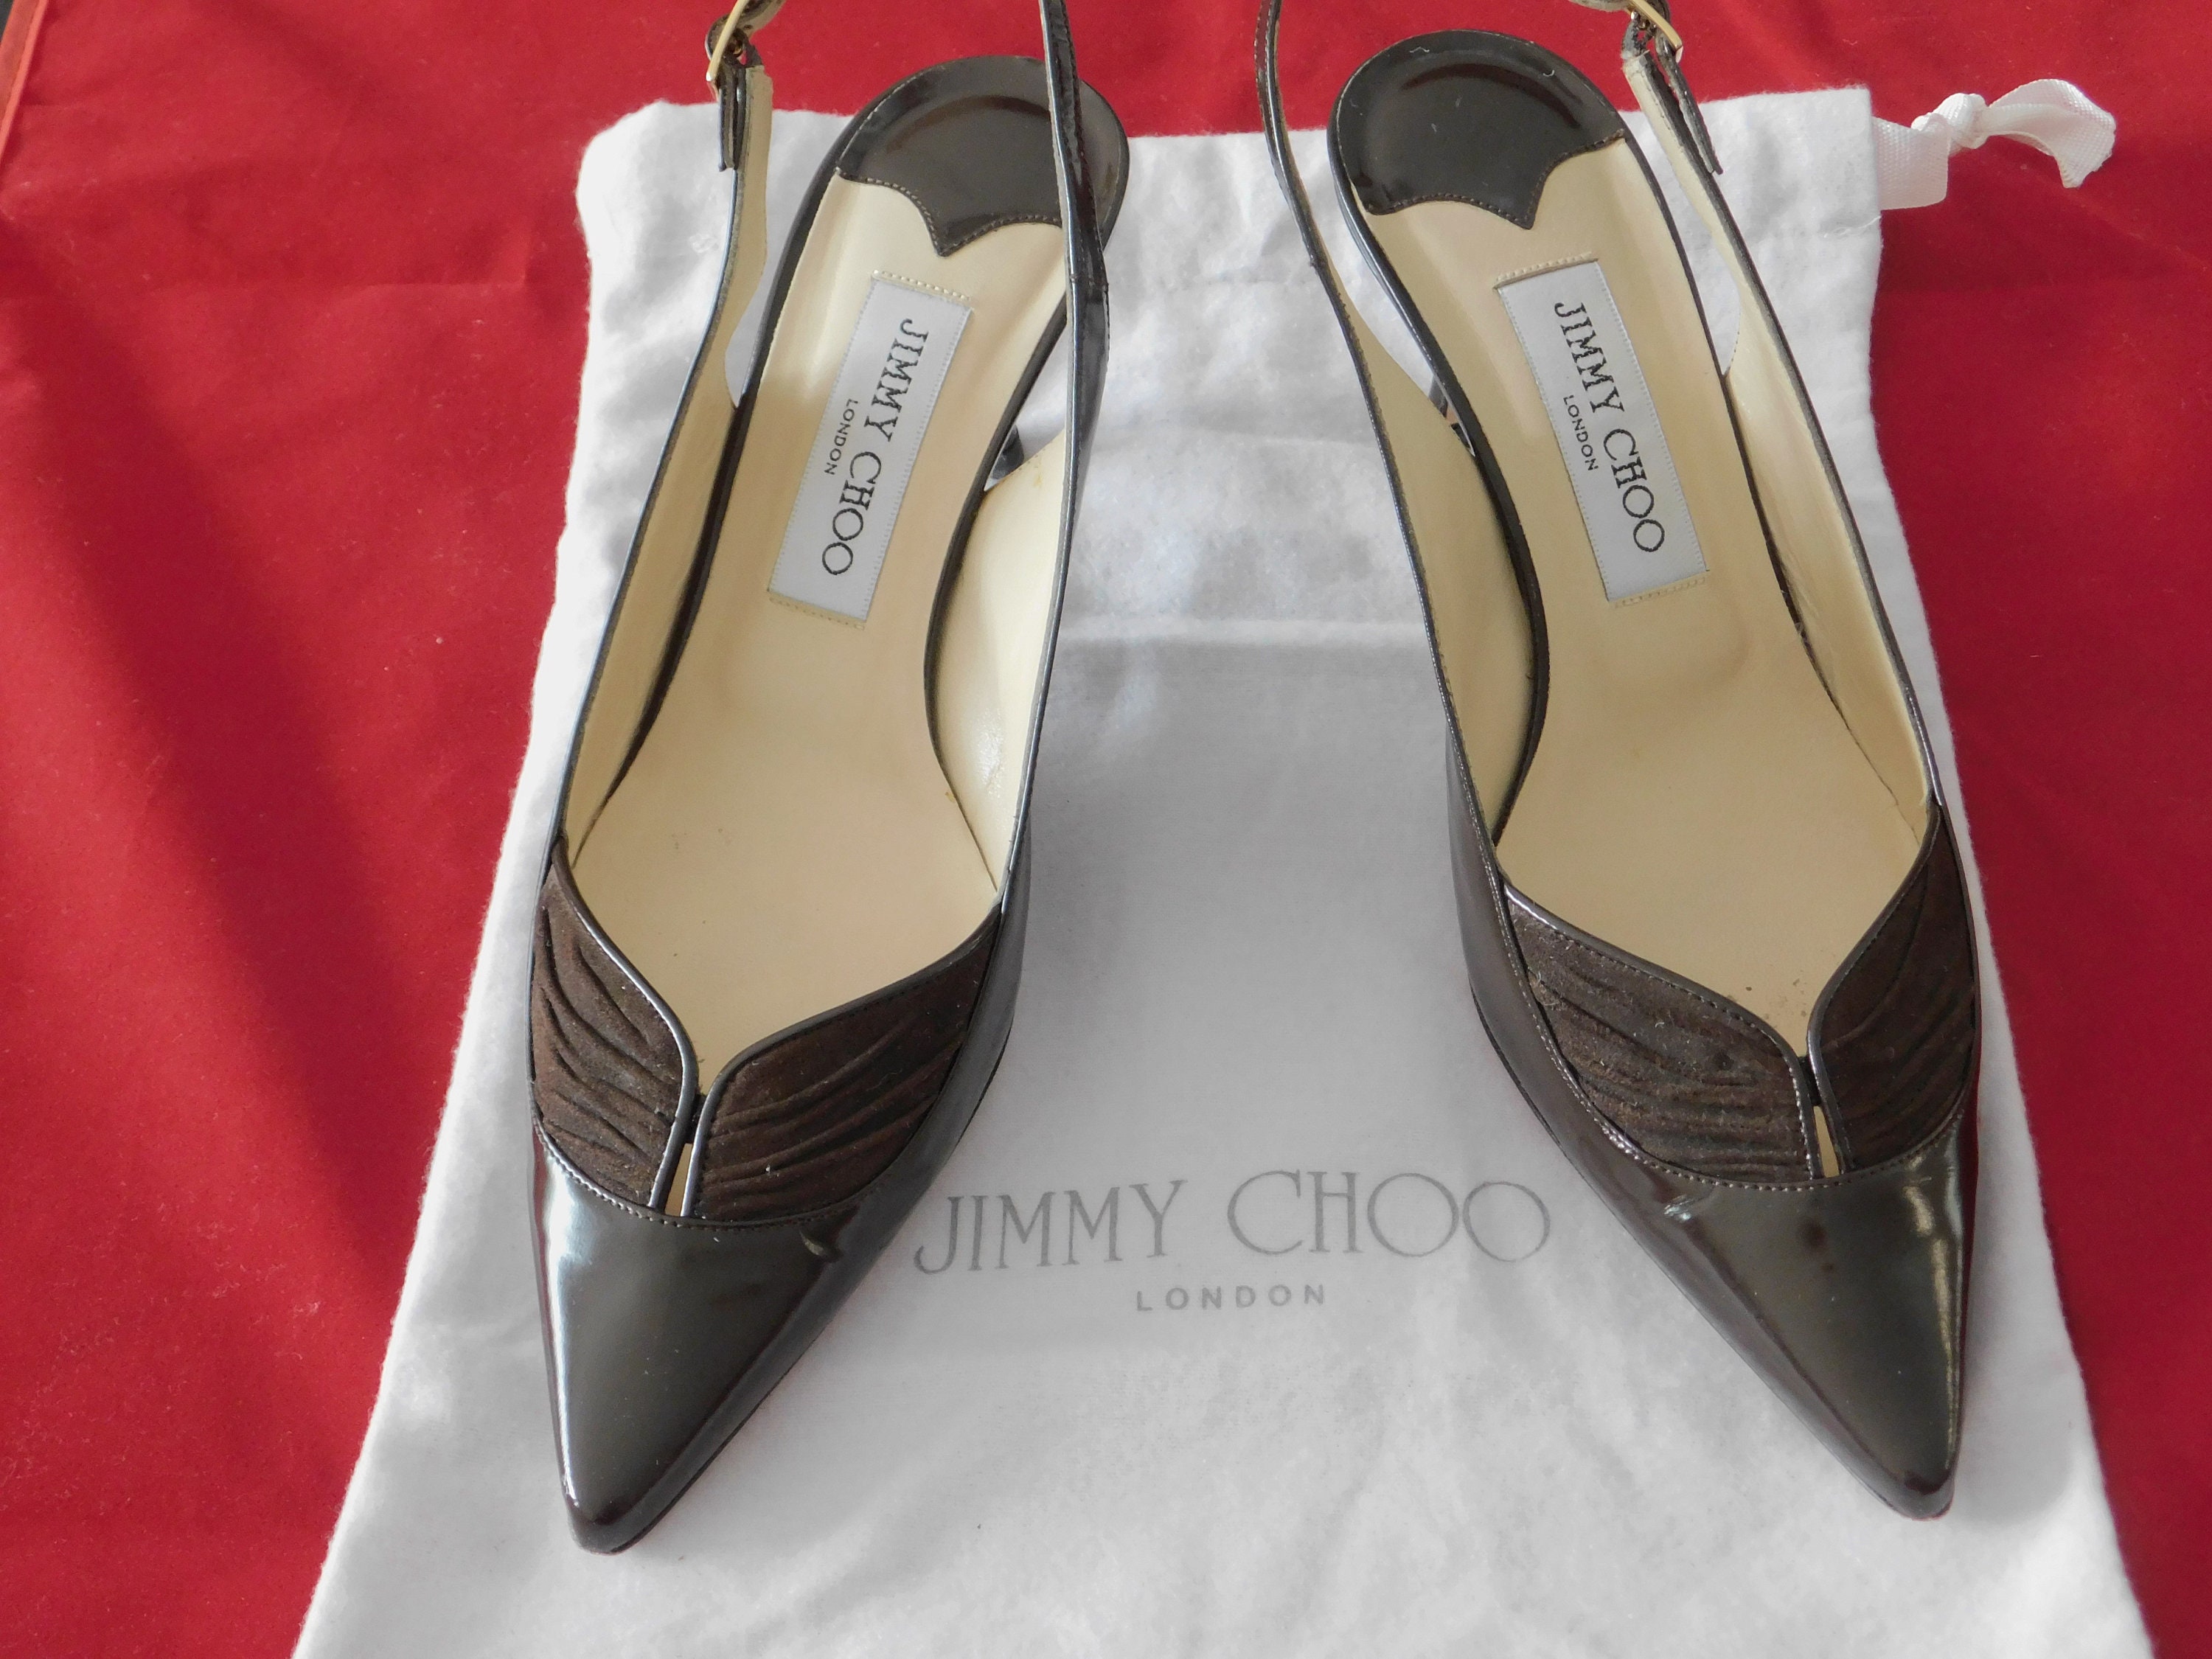 Heels, Jimmy Choo